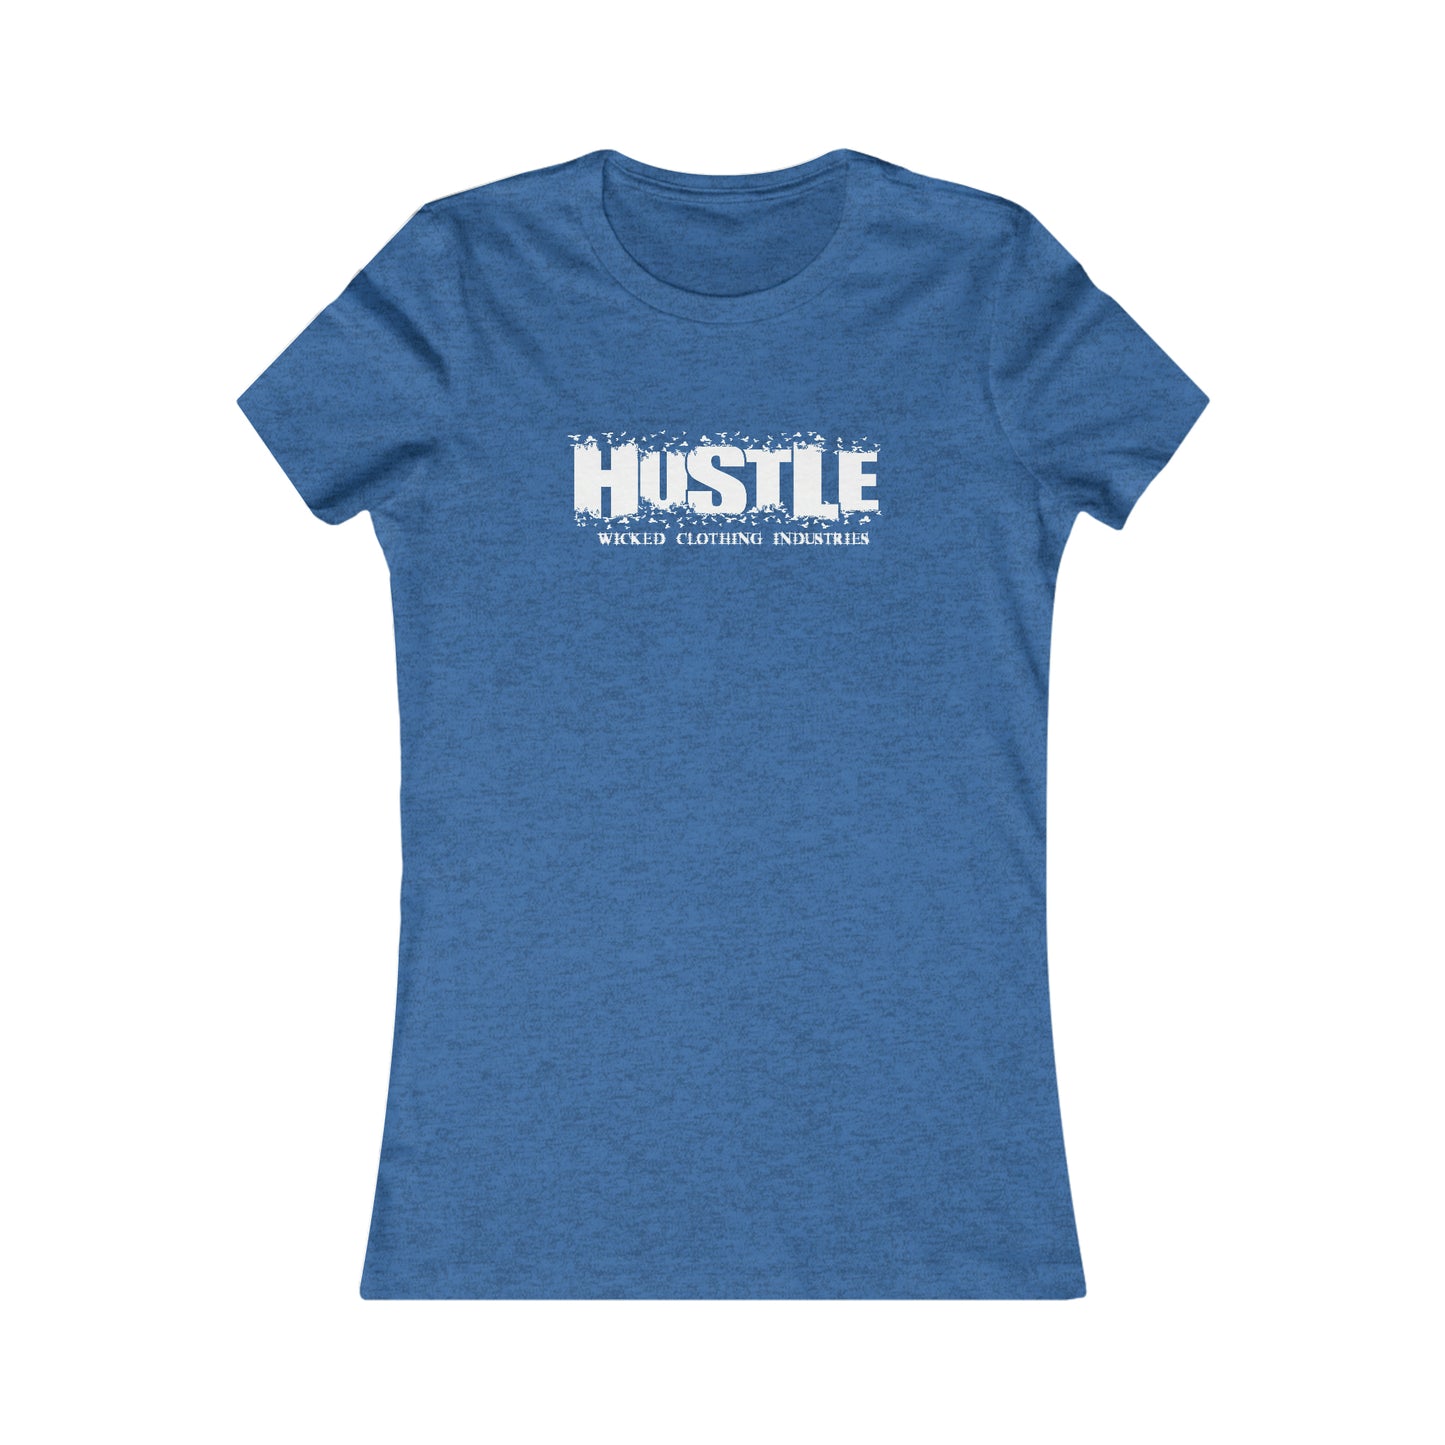 Hustle Women's Tee Shirt